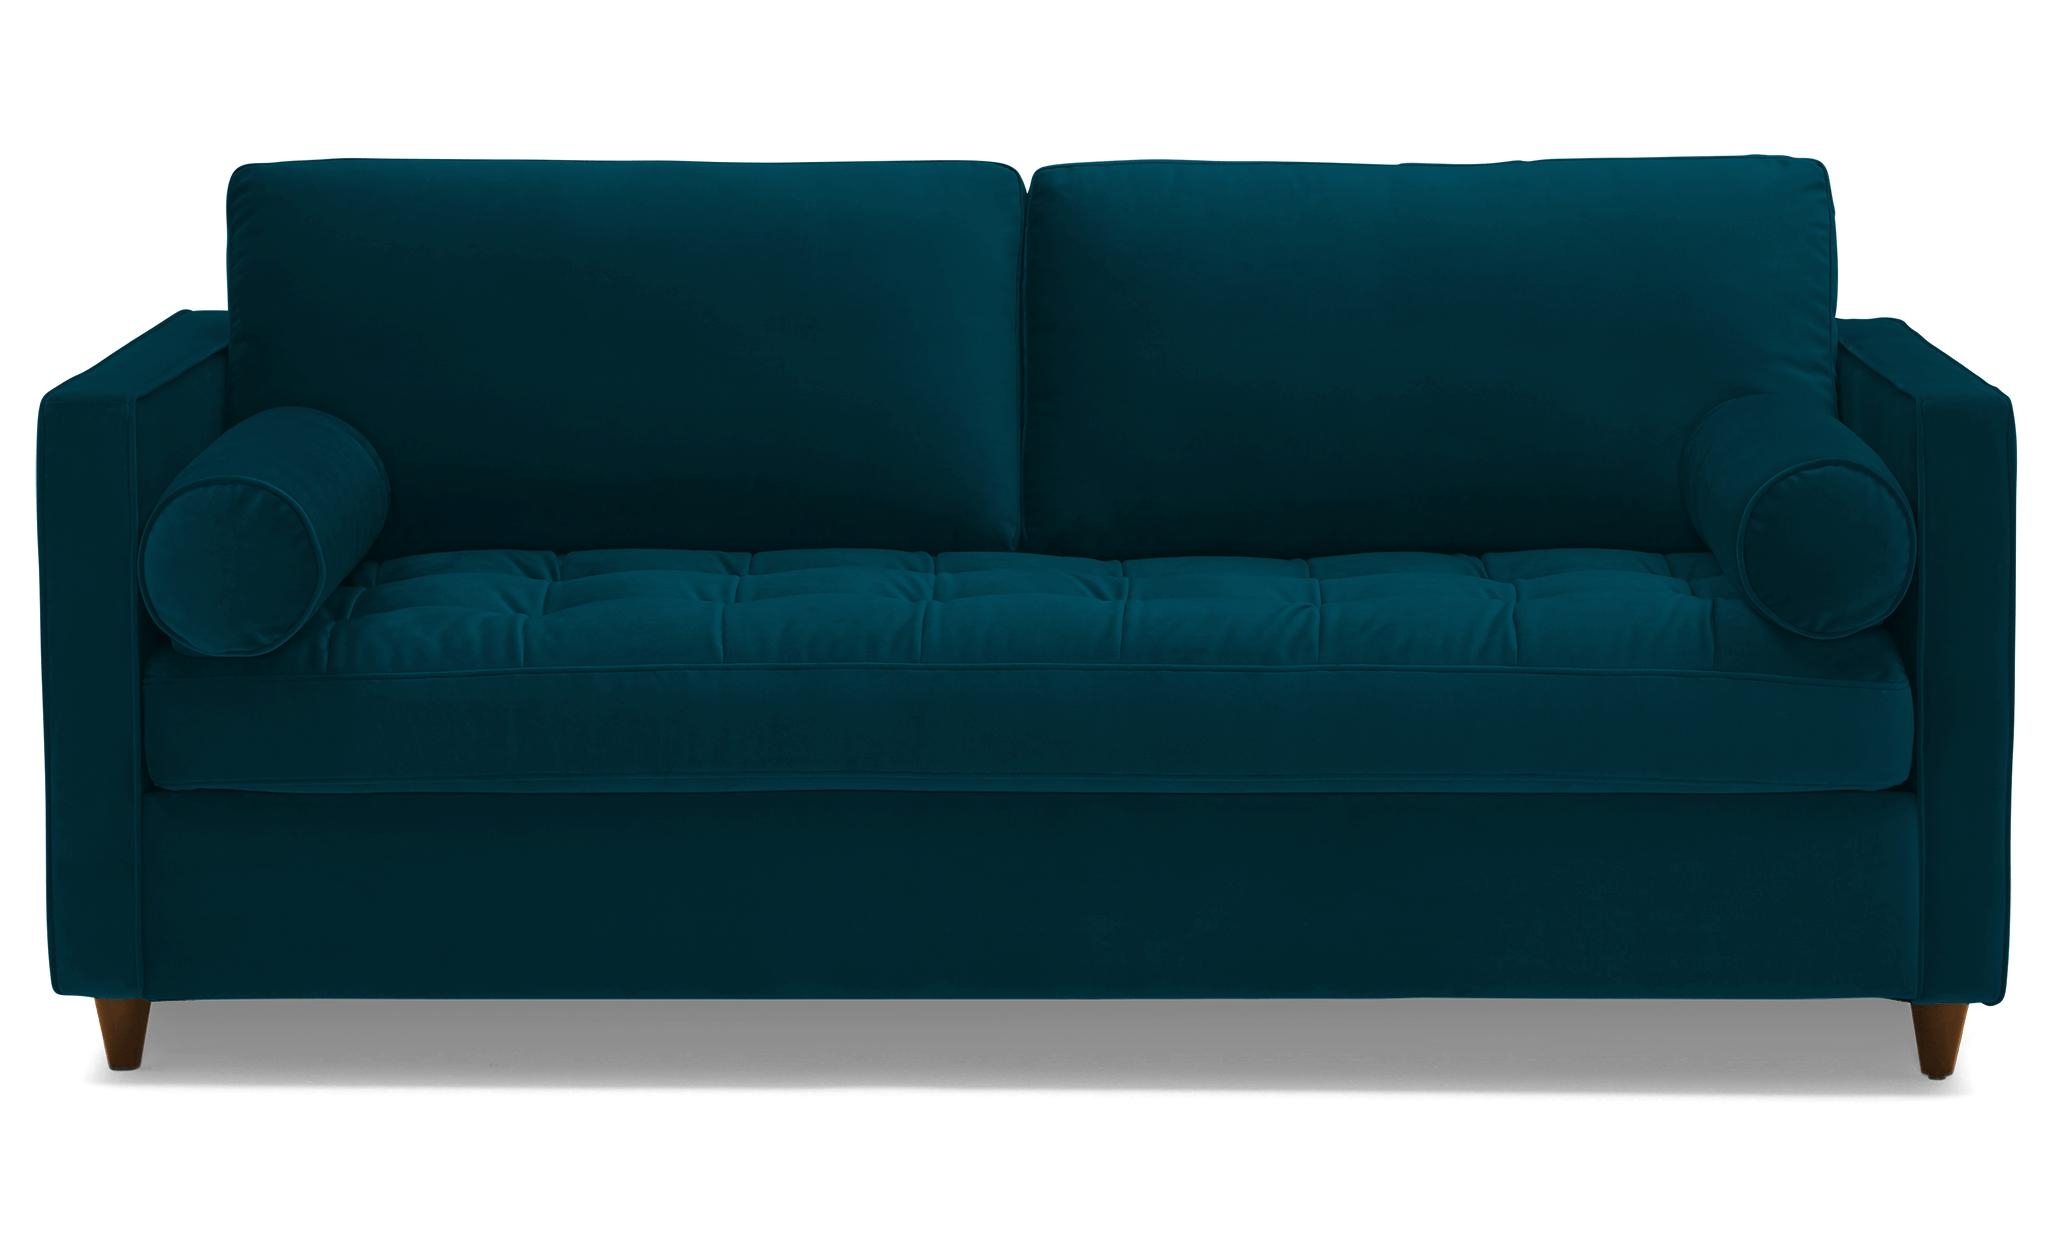 Blue Briar Mid Century Modern Sleeper Sofa - Key Largo Zenith Teal - Mocha - Image 0